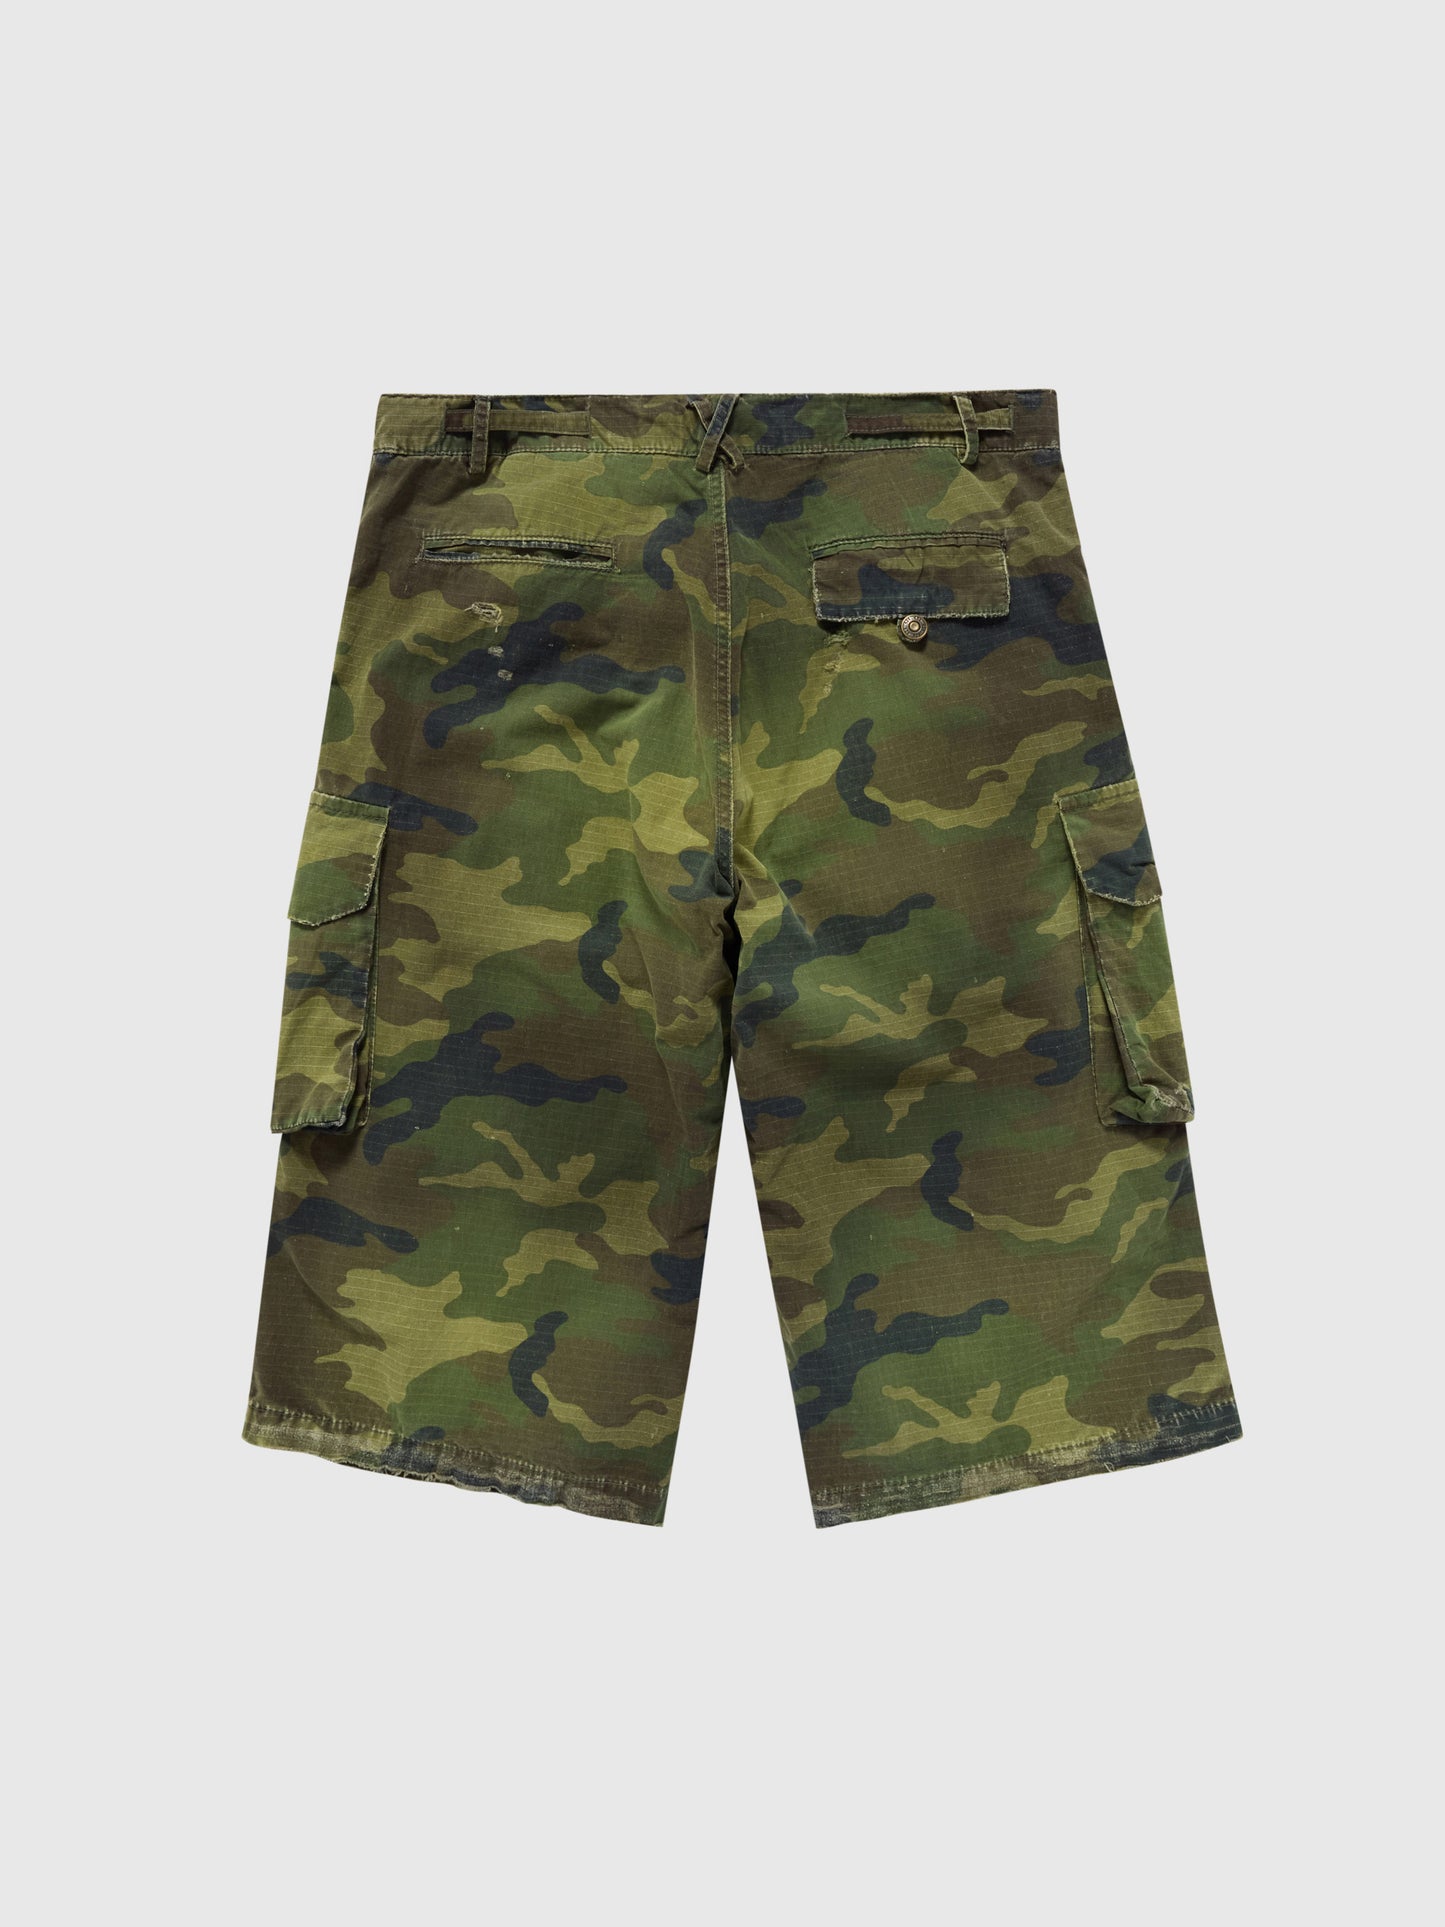 Bermuda Shorts in Camo